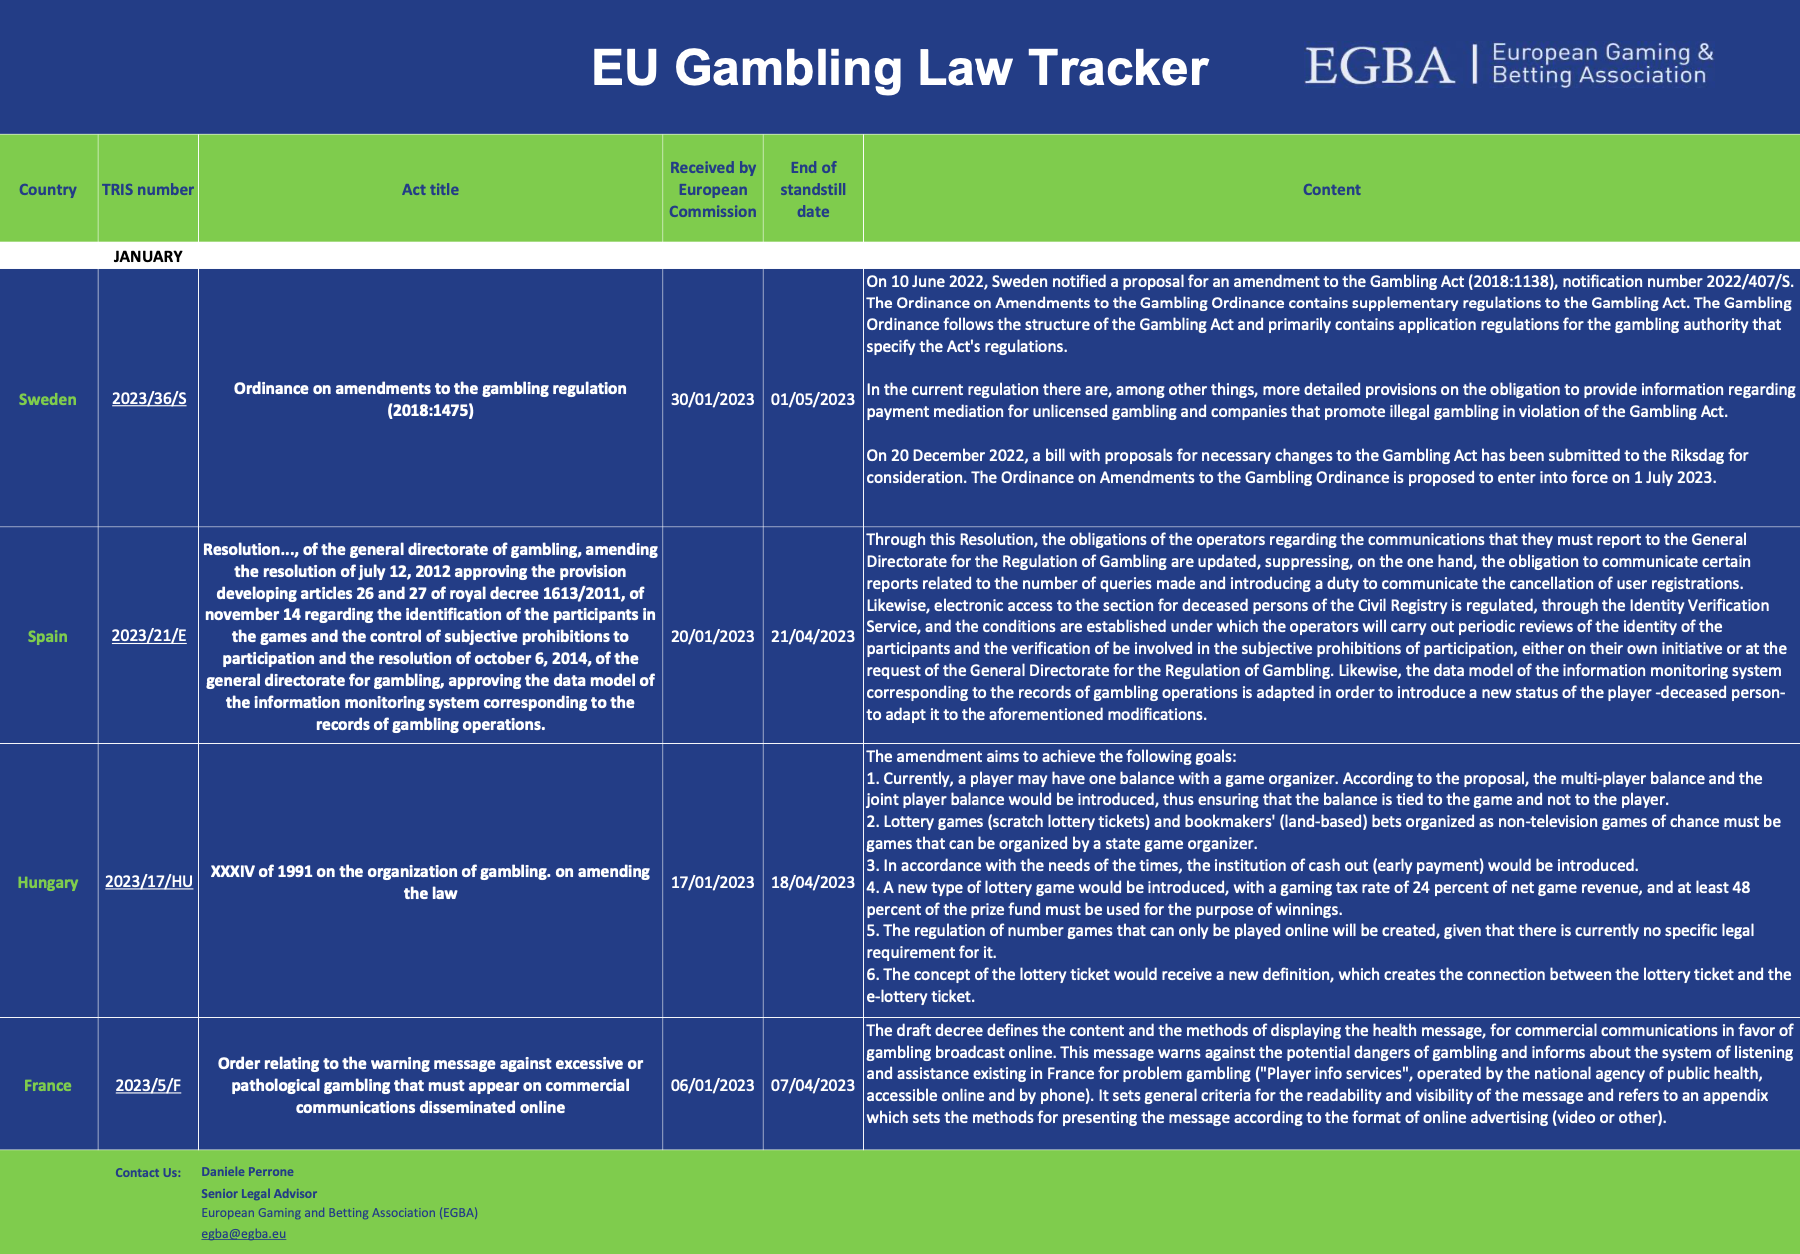 EU Gambling Law Tracker - February 2023